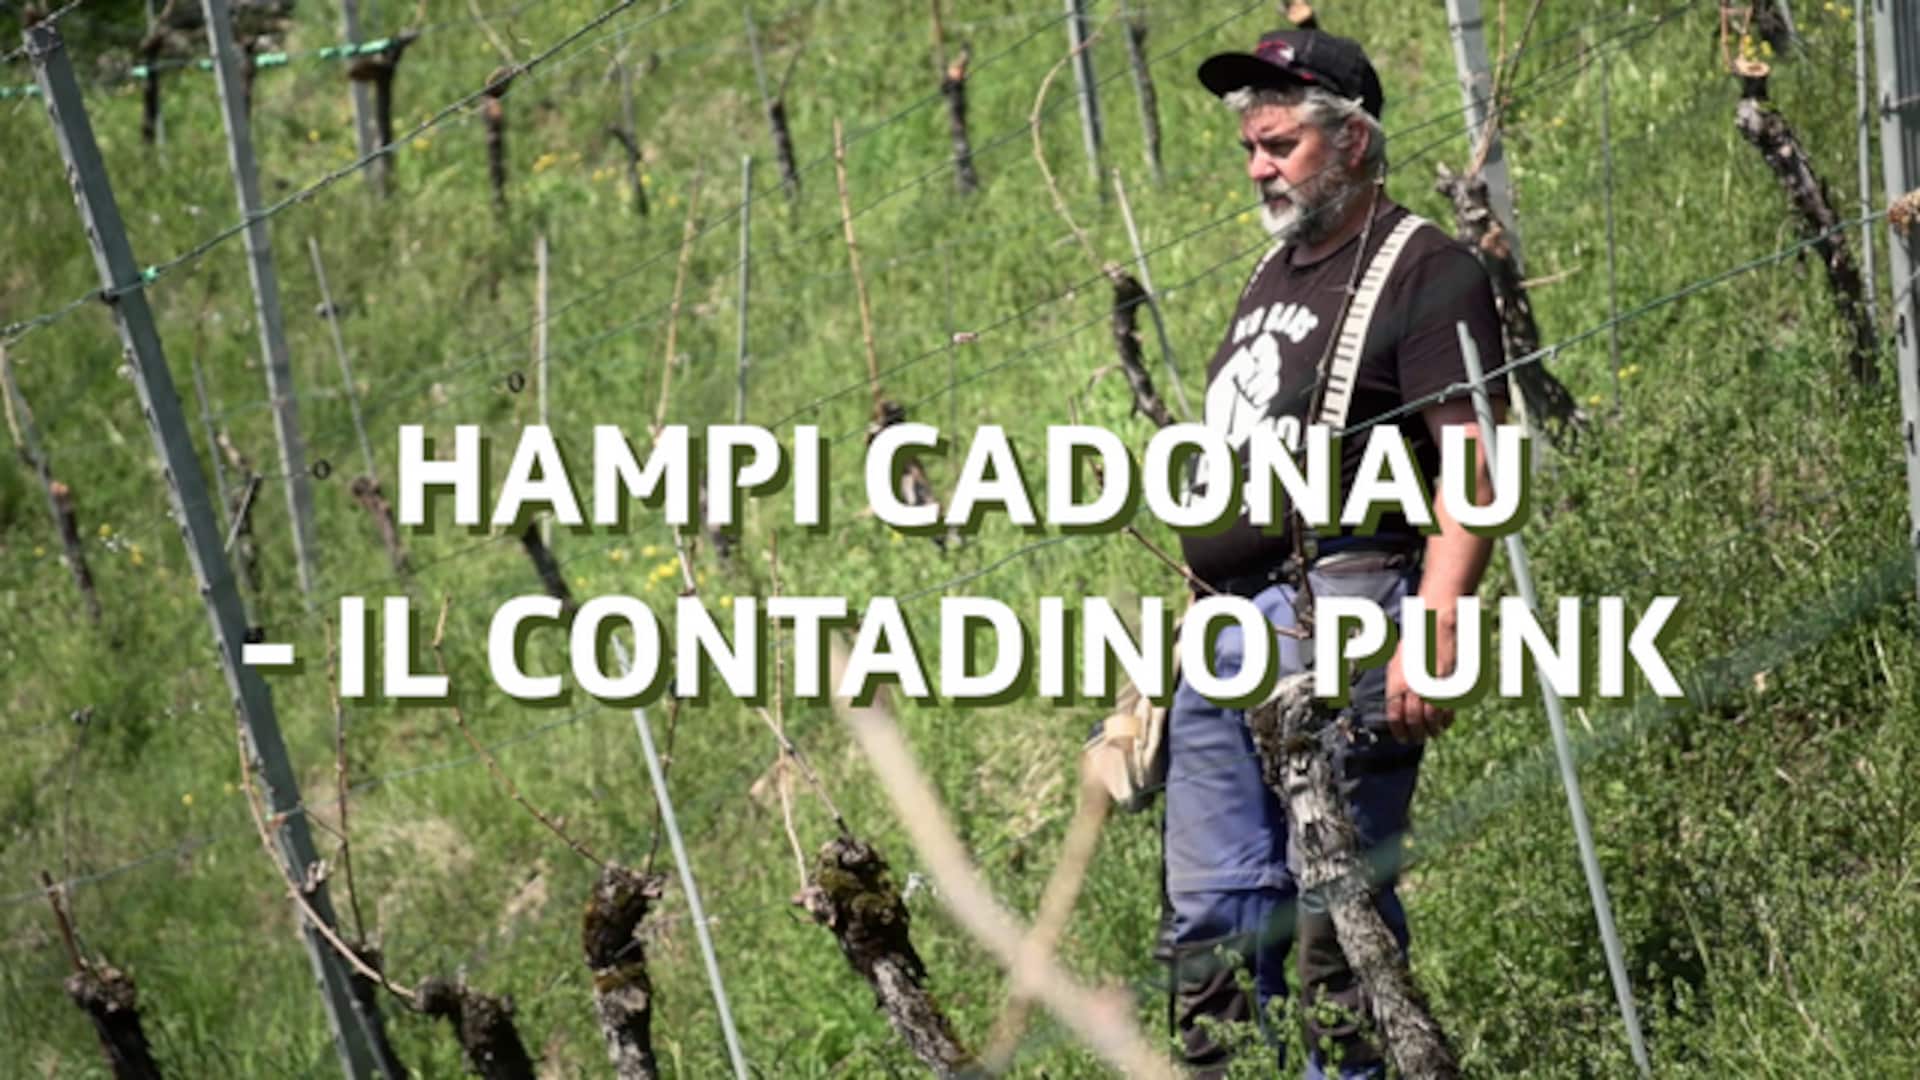 Hampi Cadonau - Il contadino punk